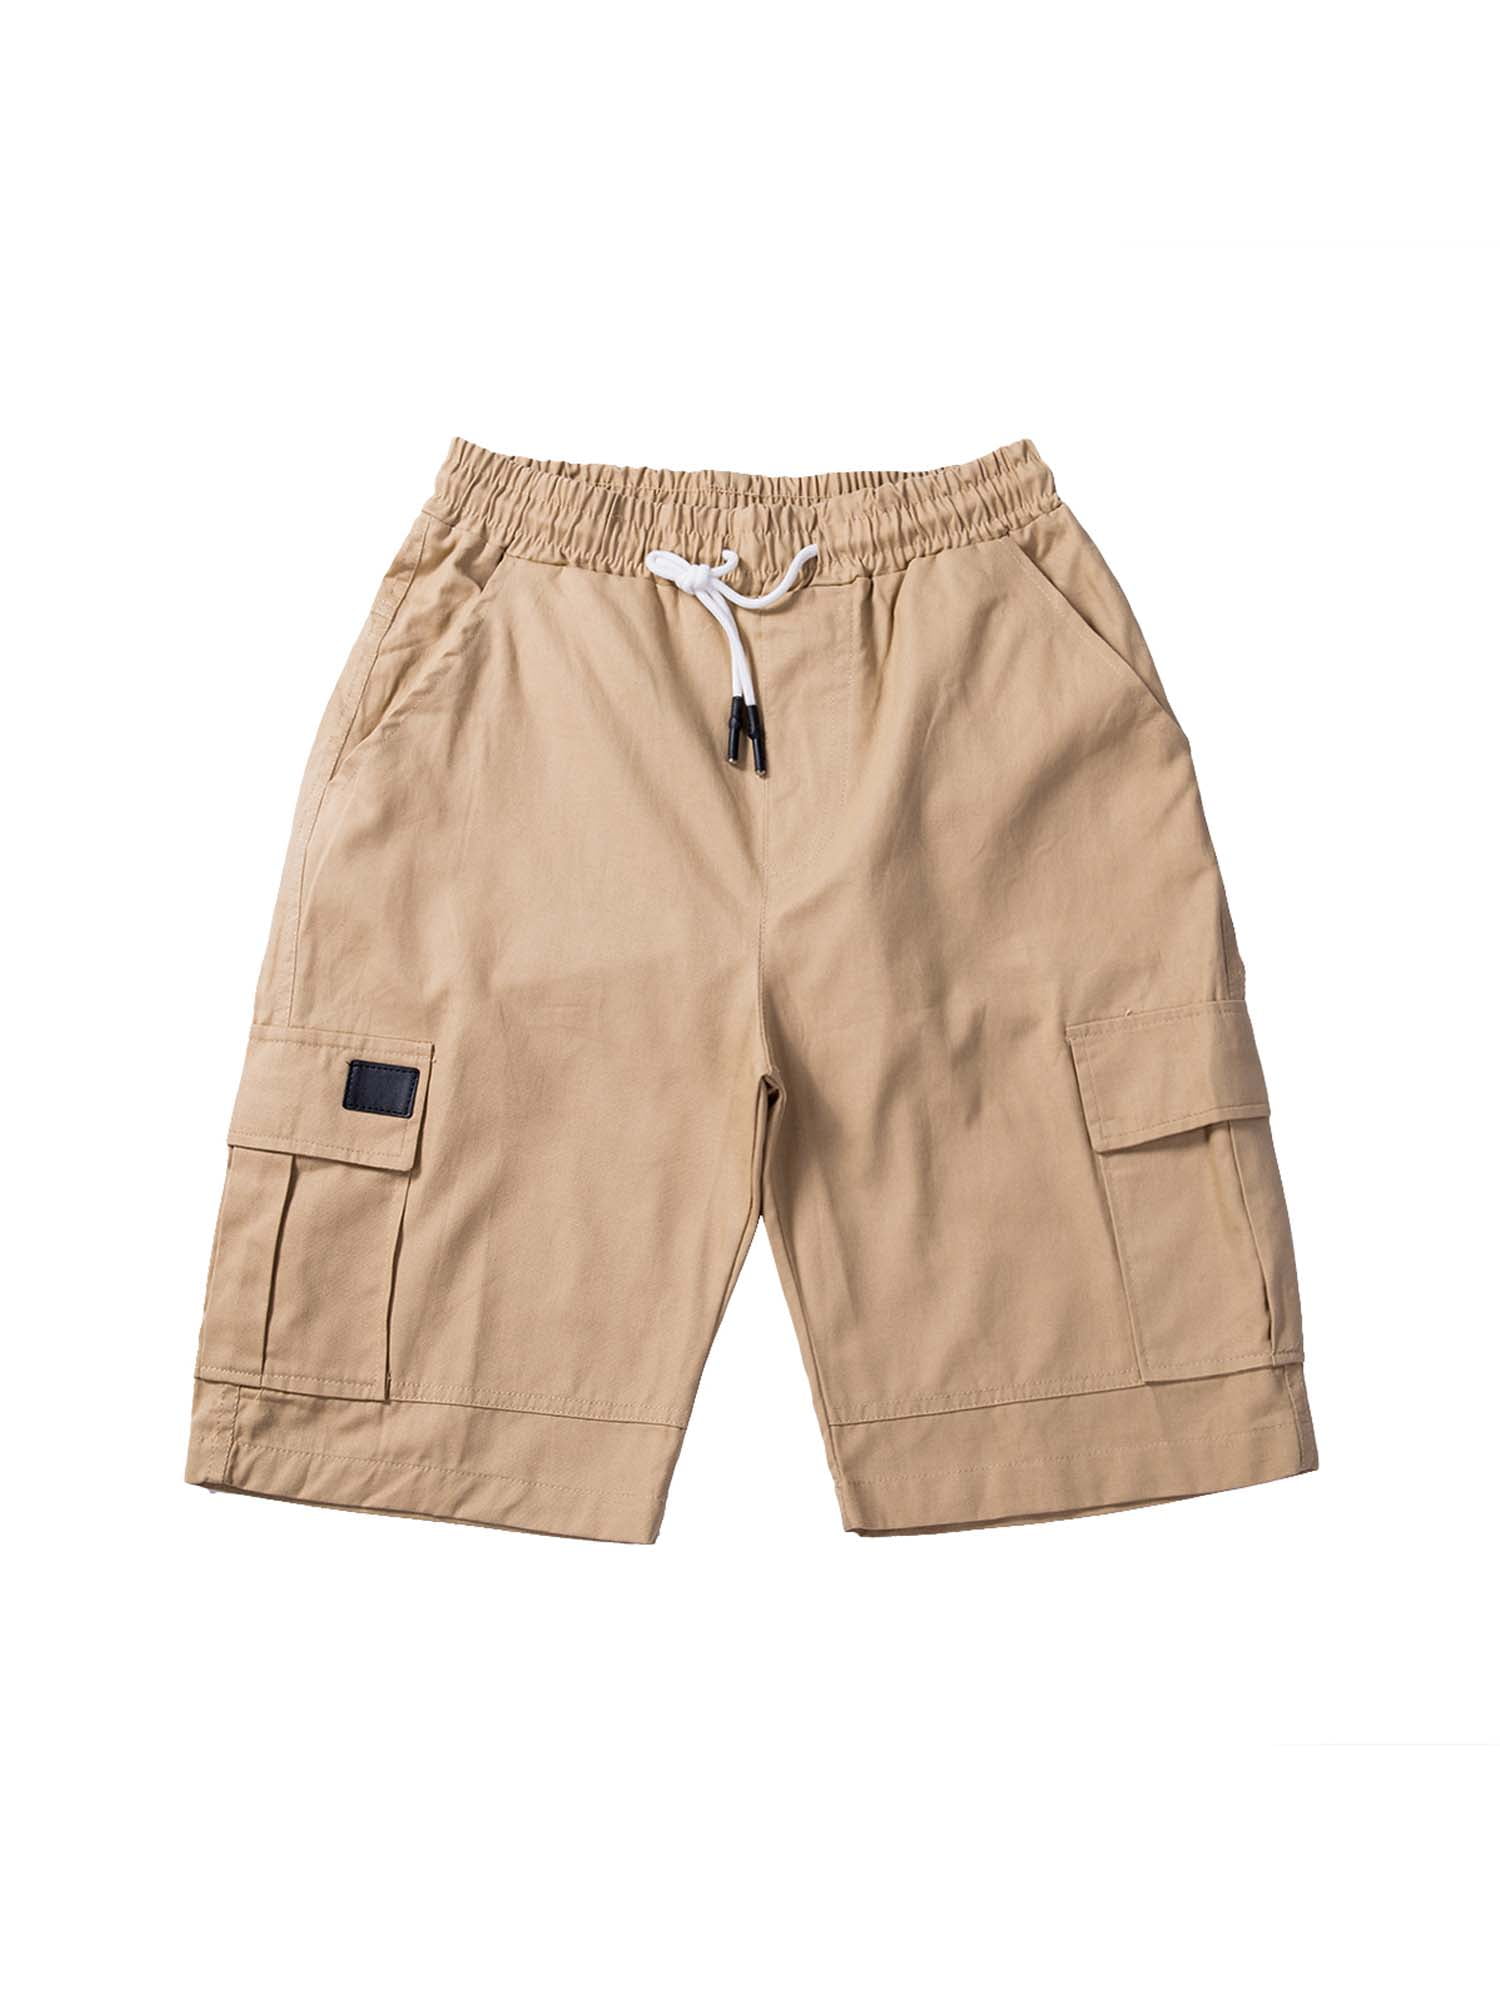 Yanlian1 Spandex Beachshorts Mens Waterproof Quick Dry Bermudas Fashion Boardshorts Mens Casual Shorts,L Gray